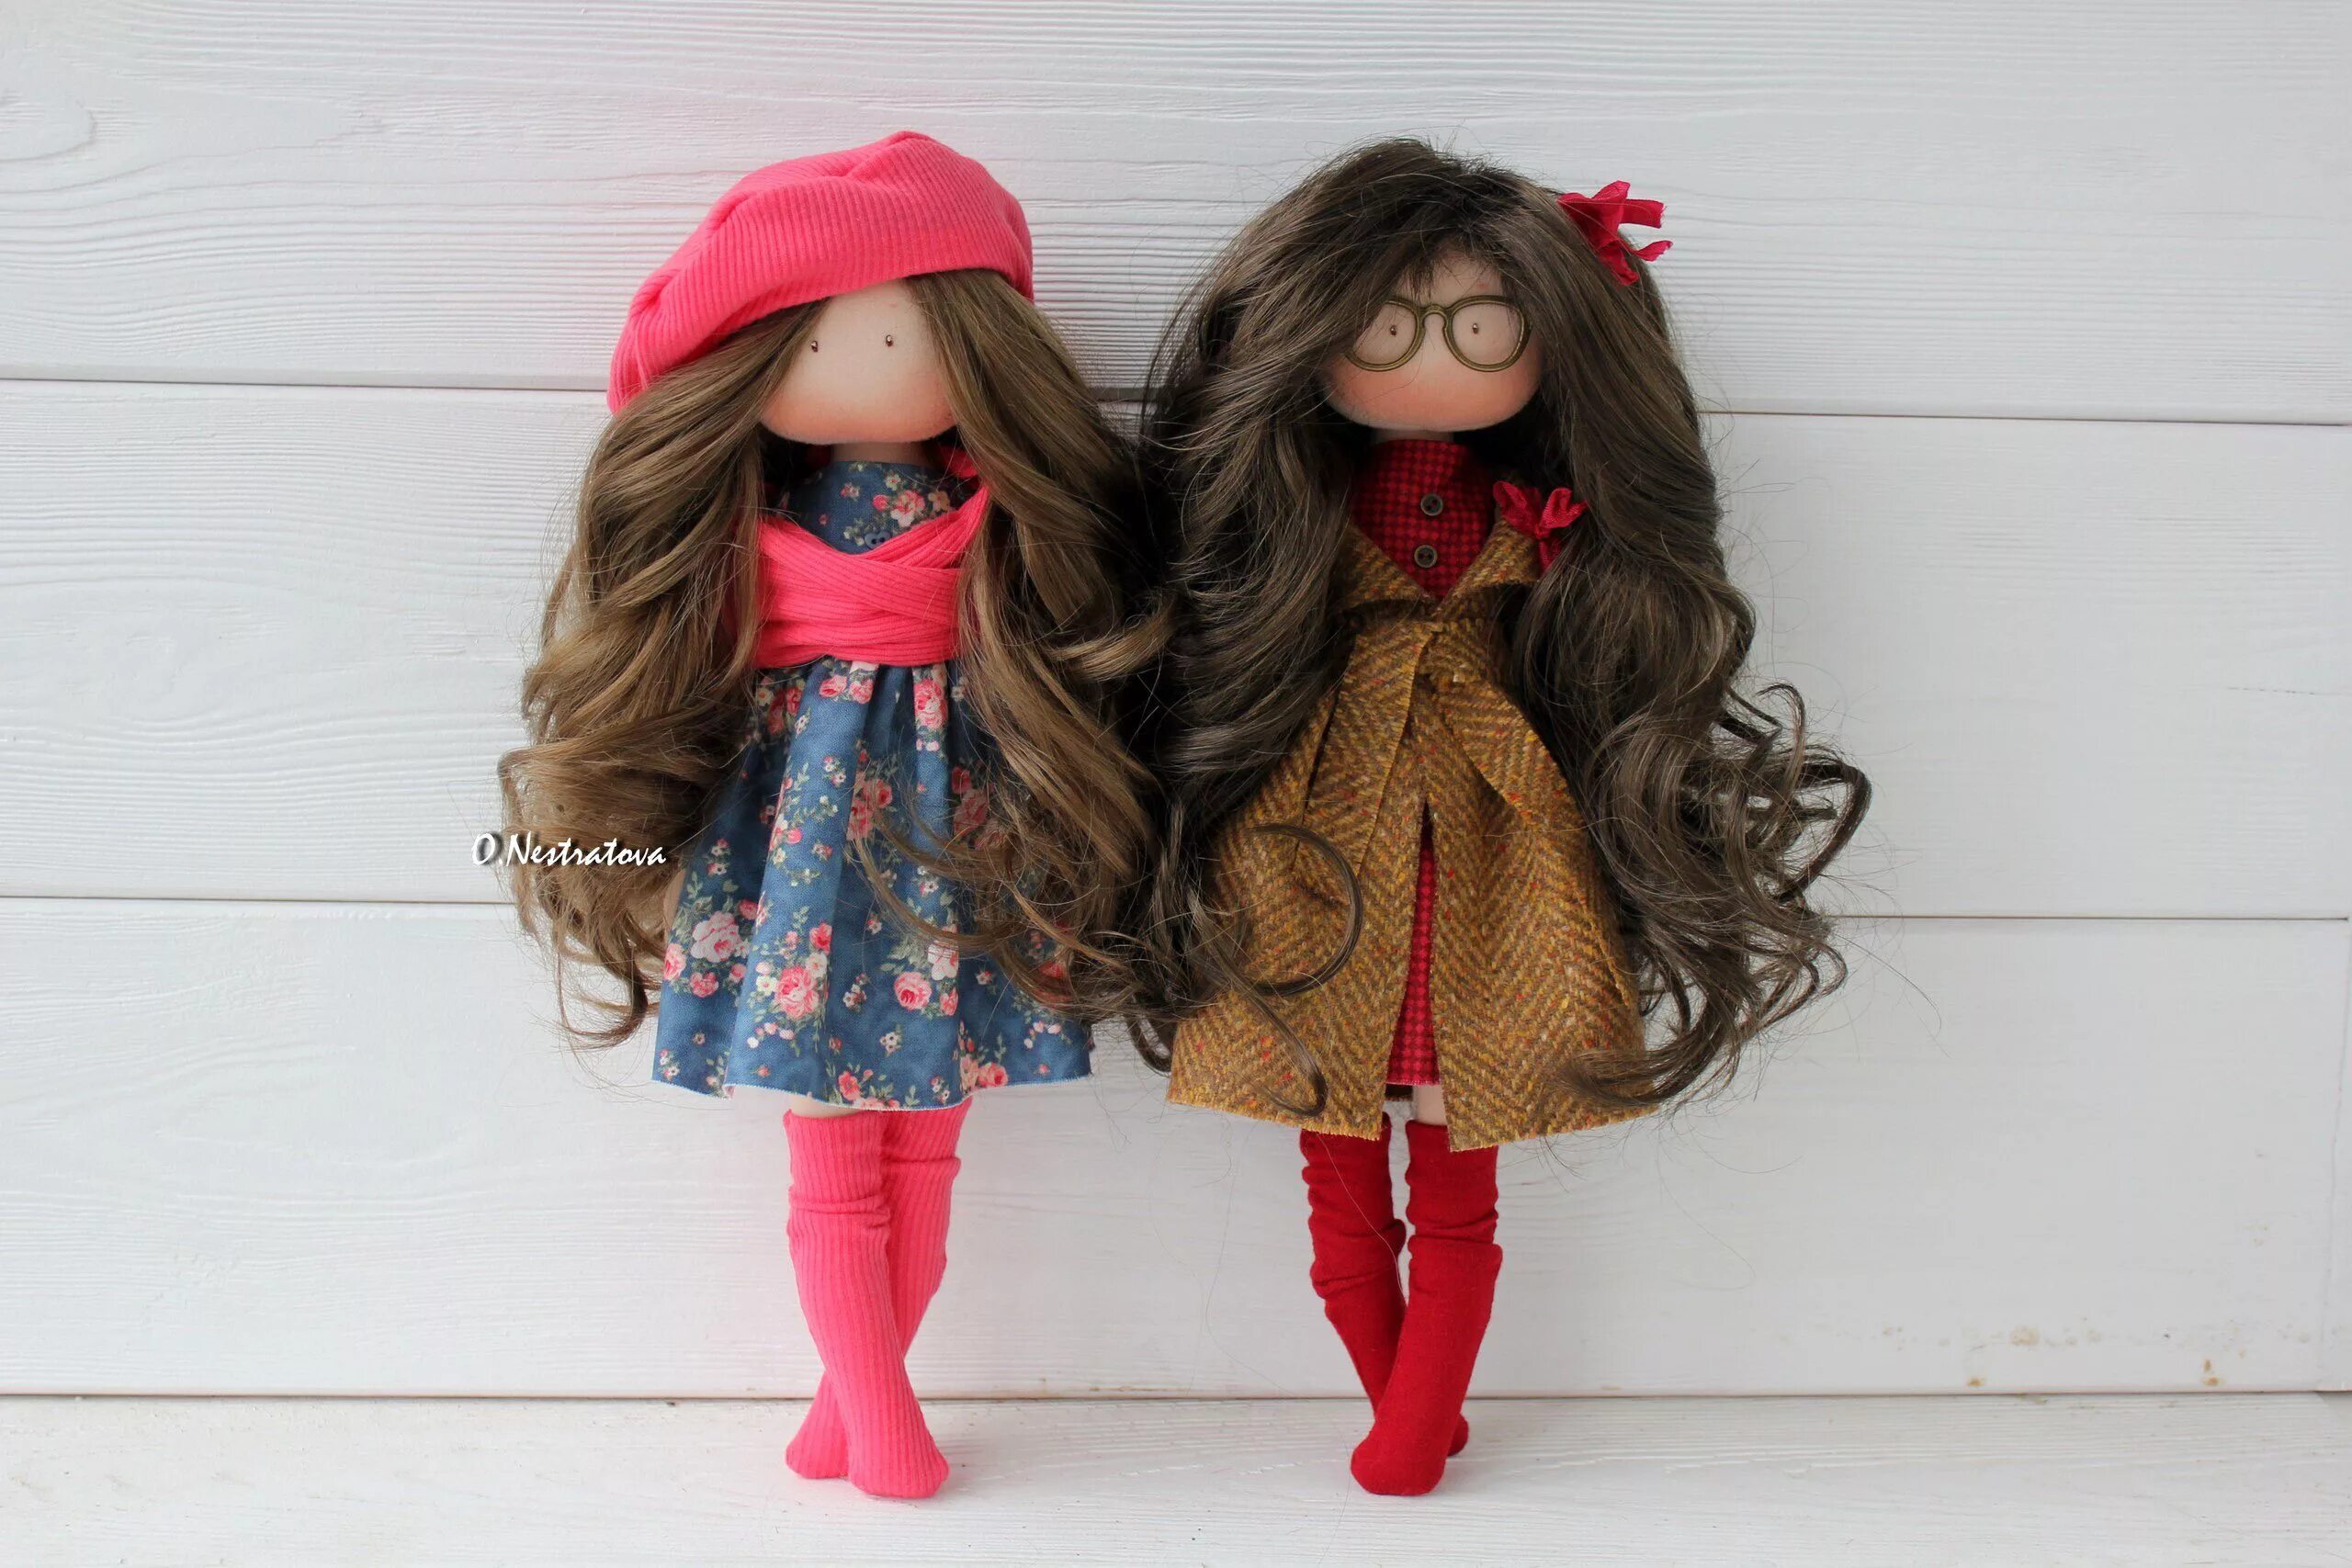 This is my doll. Куклы Олеси Нестратовой мастер класс. Дизайнерские куклы. Дизайнерские куклы ручной работы.